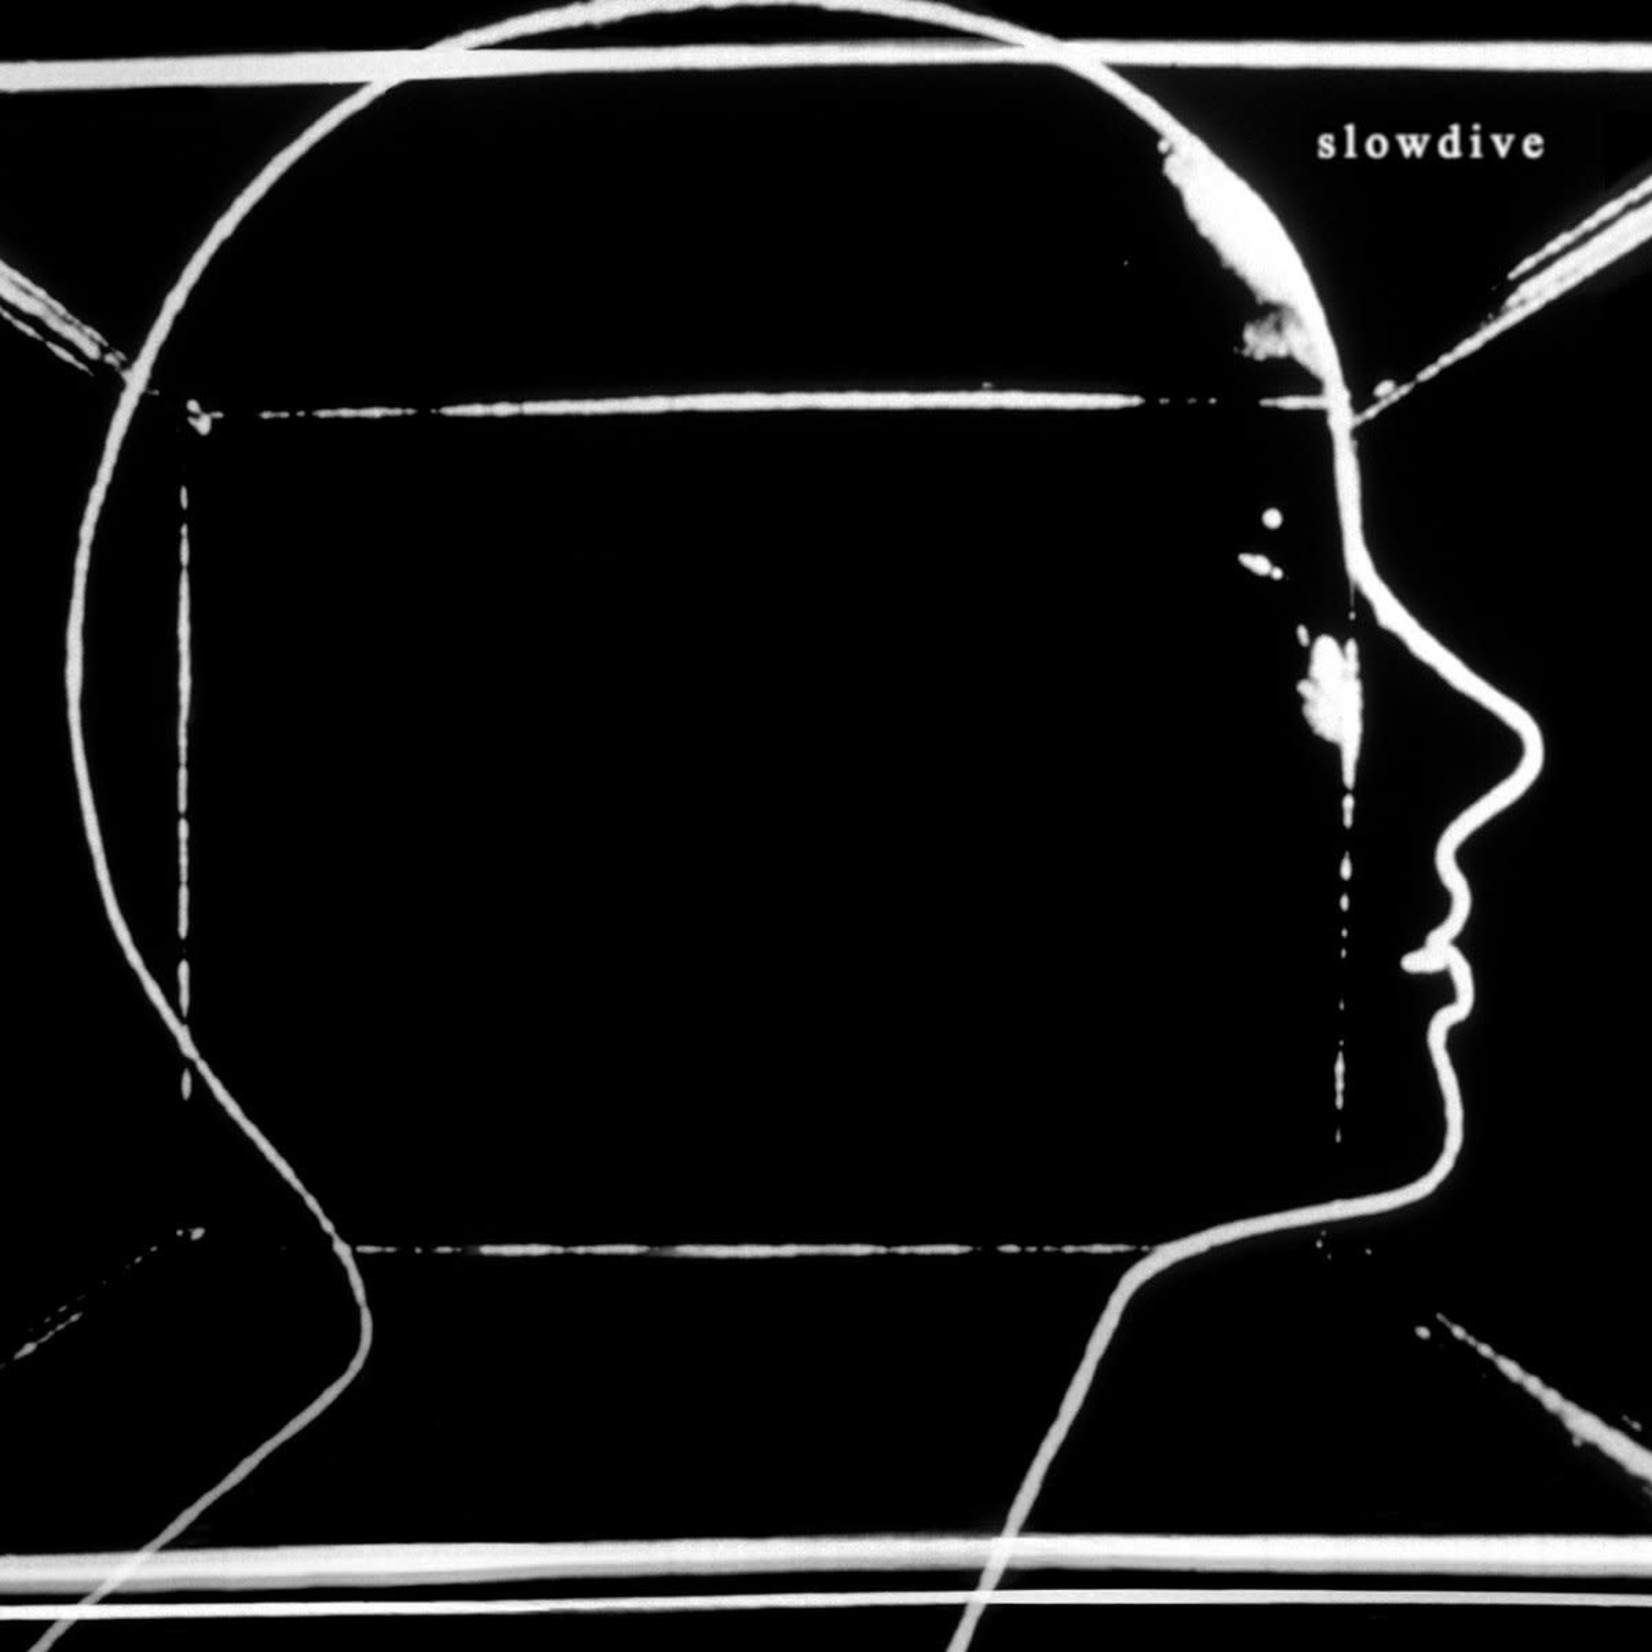 [New] Slowdive - self-titled